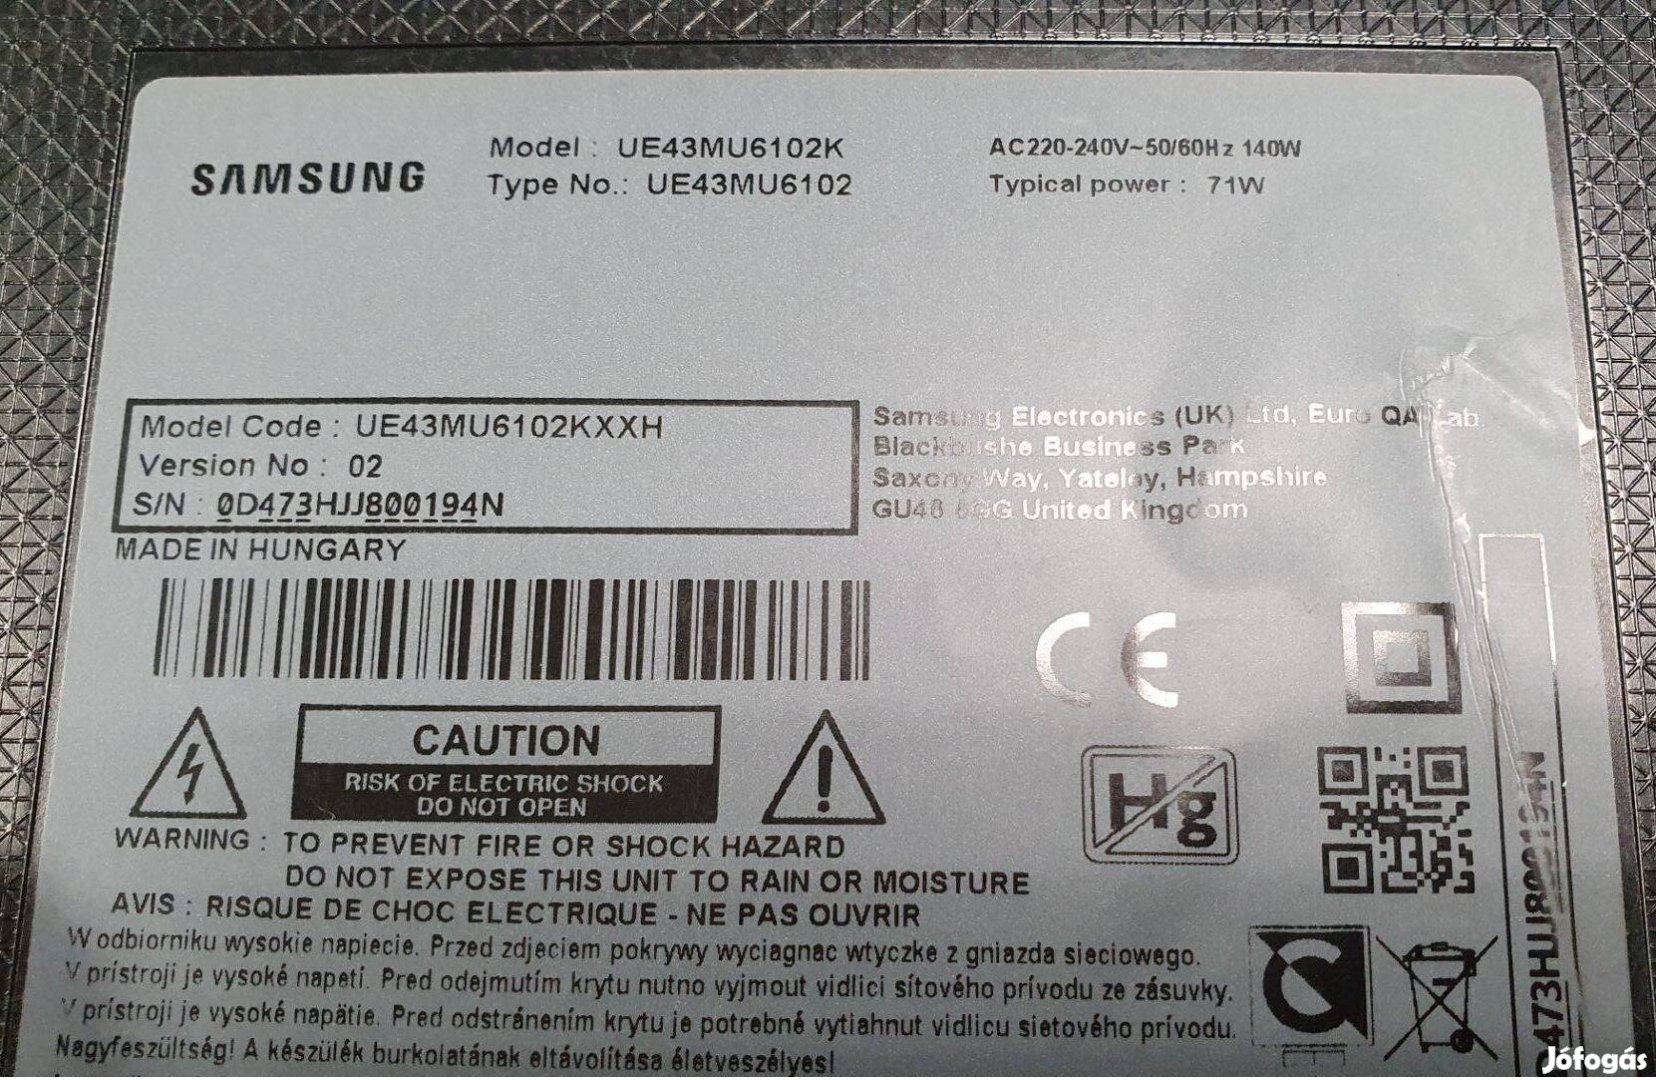 Samsung UE43MU6102 LED LCD hibás törött UE43MU6102K mainboard elkelt!